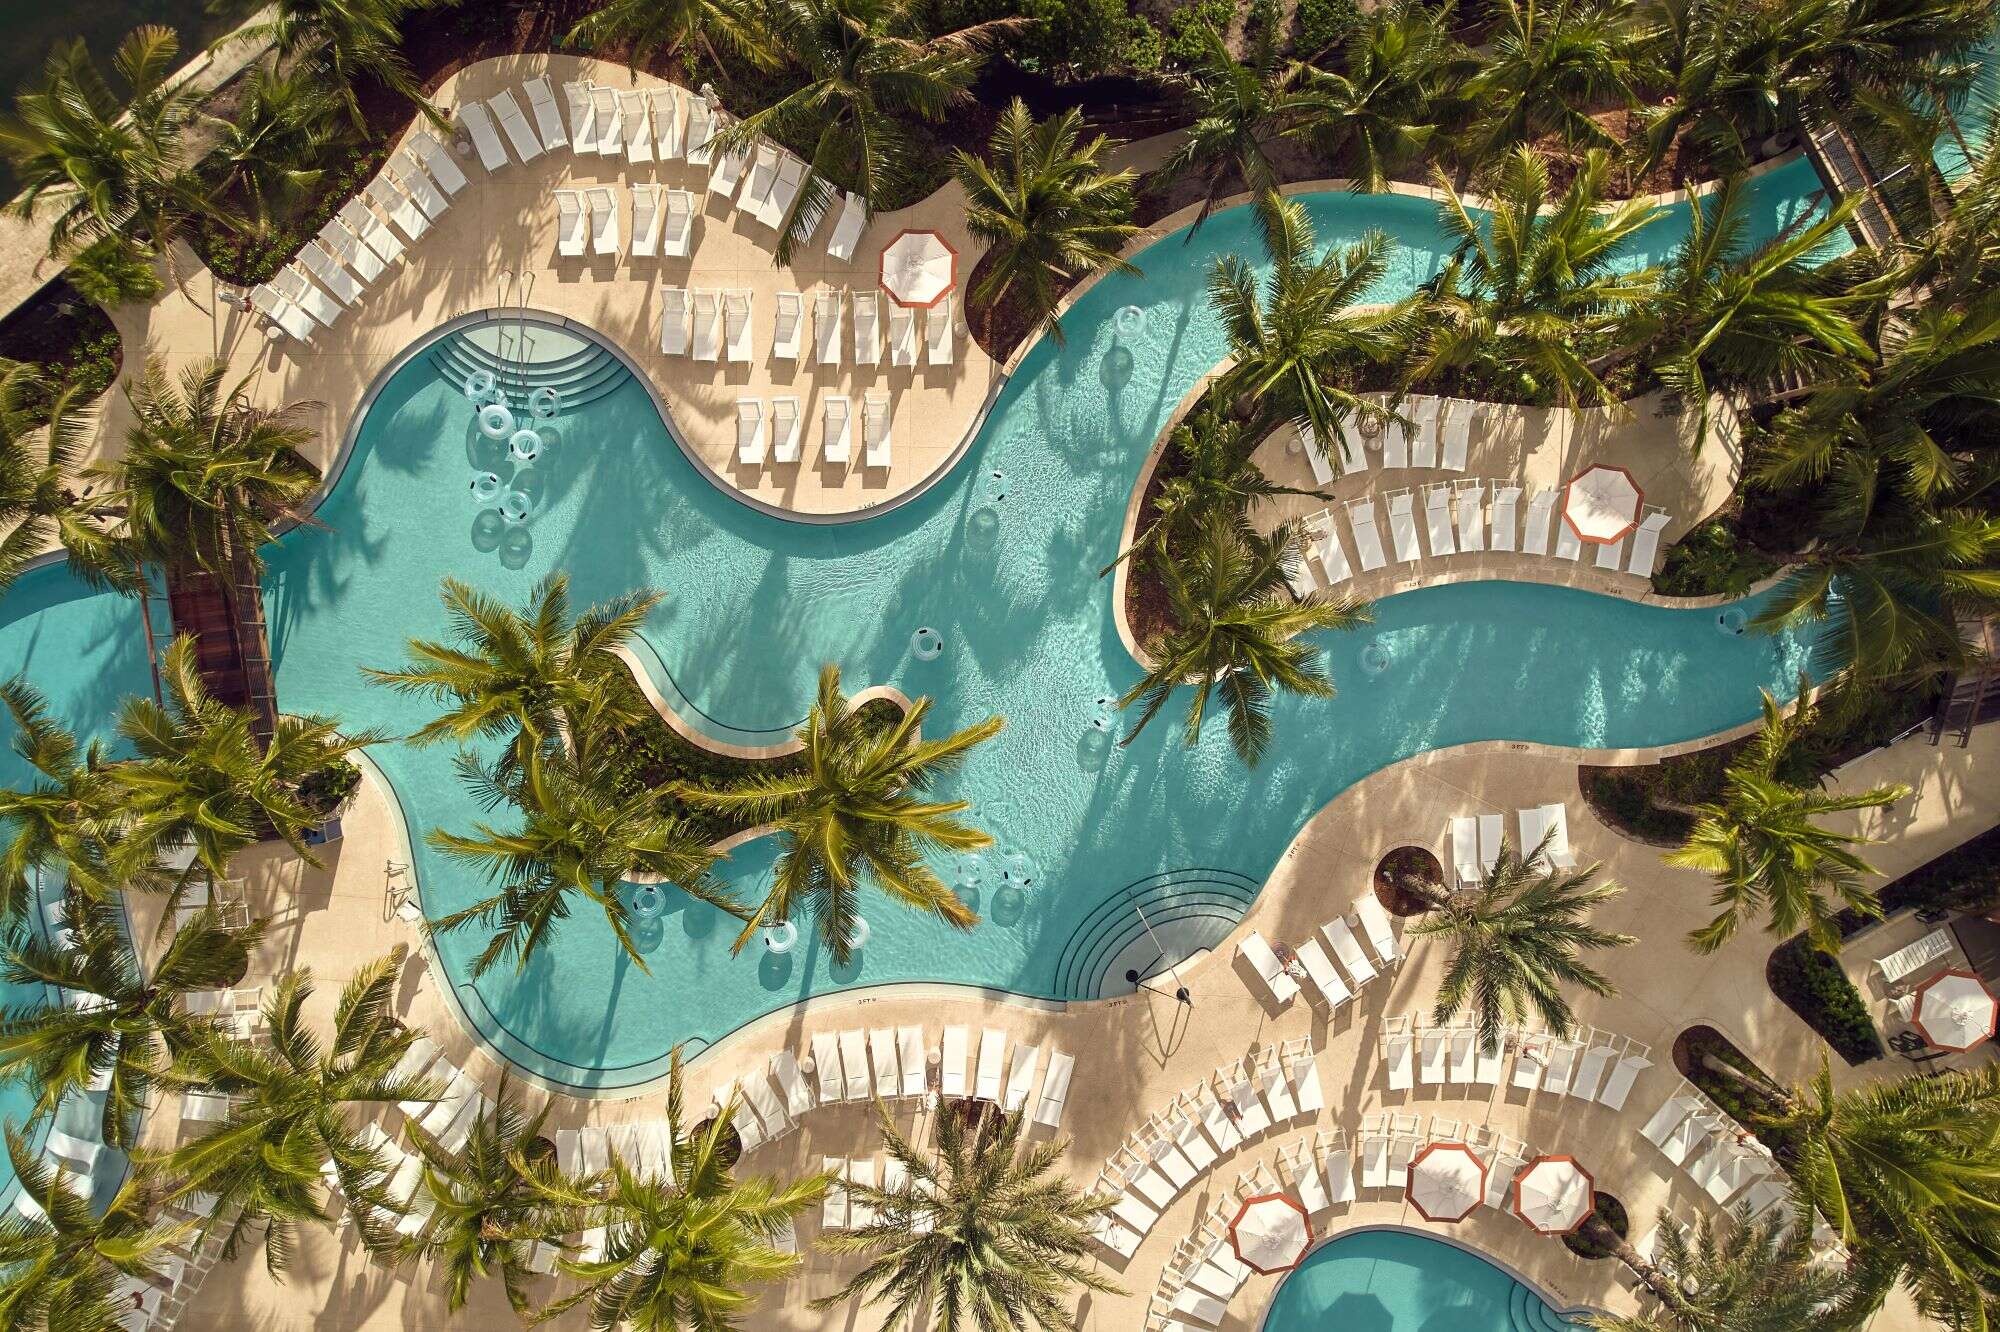 The Boca Raton outdoor pool aerial shot